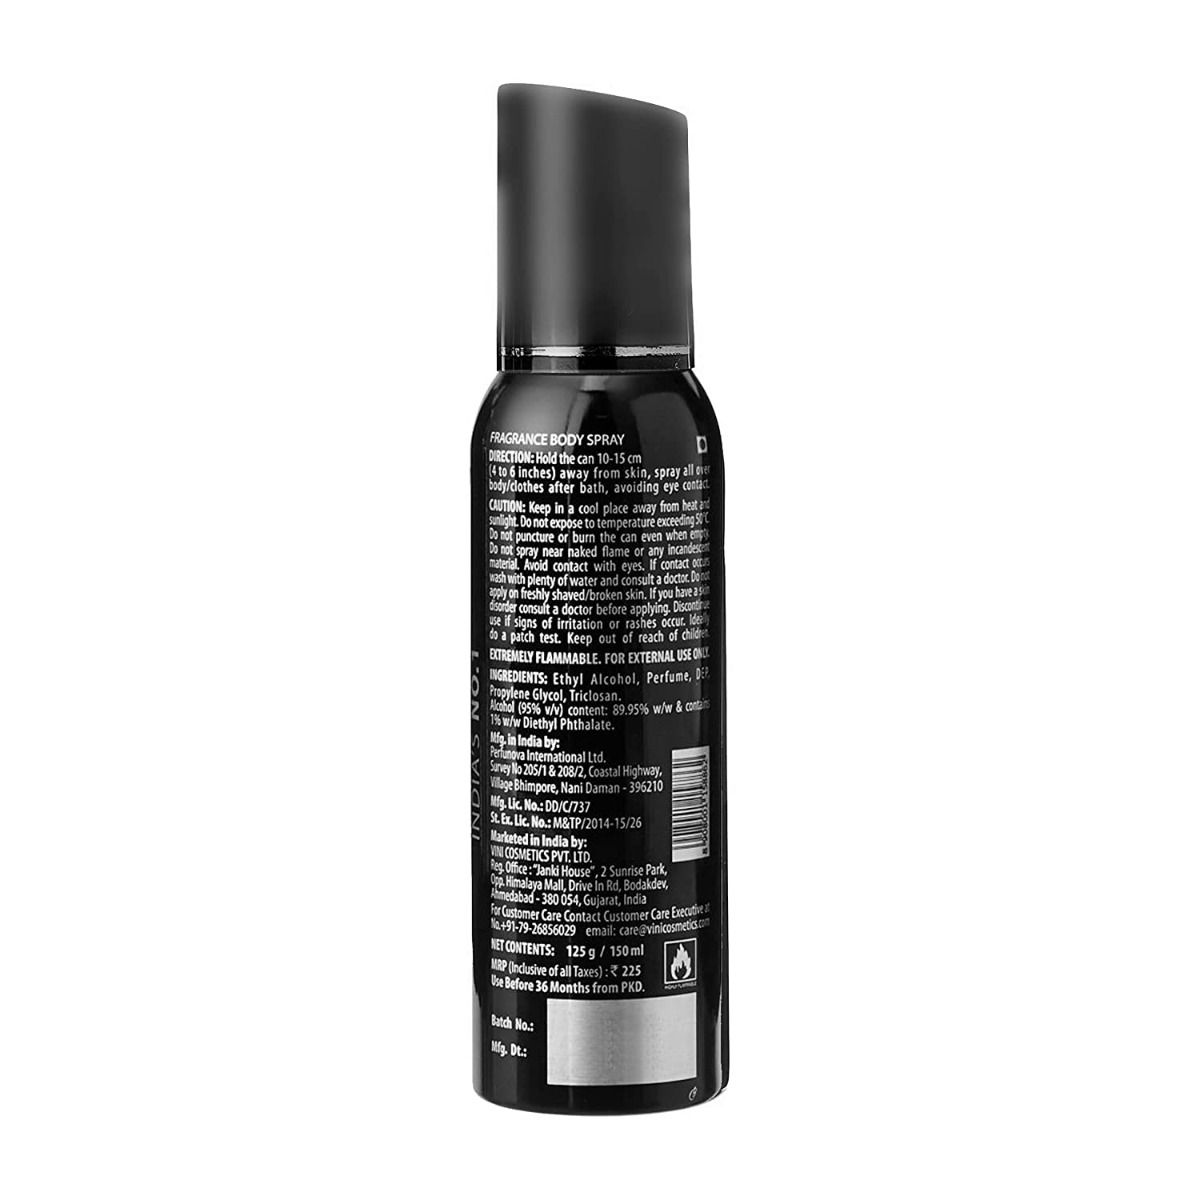 Fogg Marco Fragrance Body Spray, 150 ml, Pack of 1 